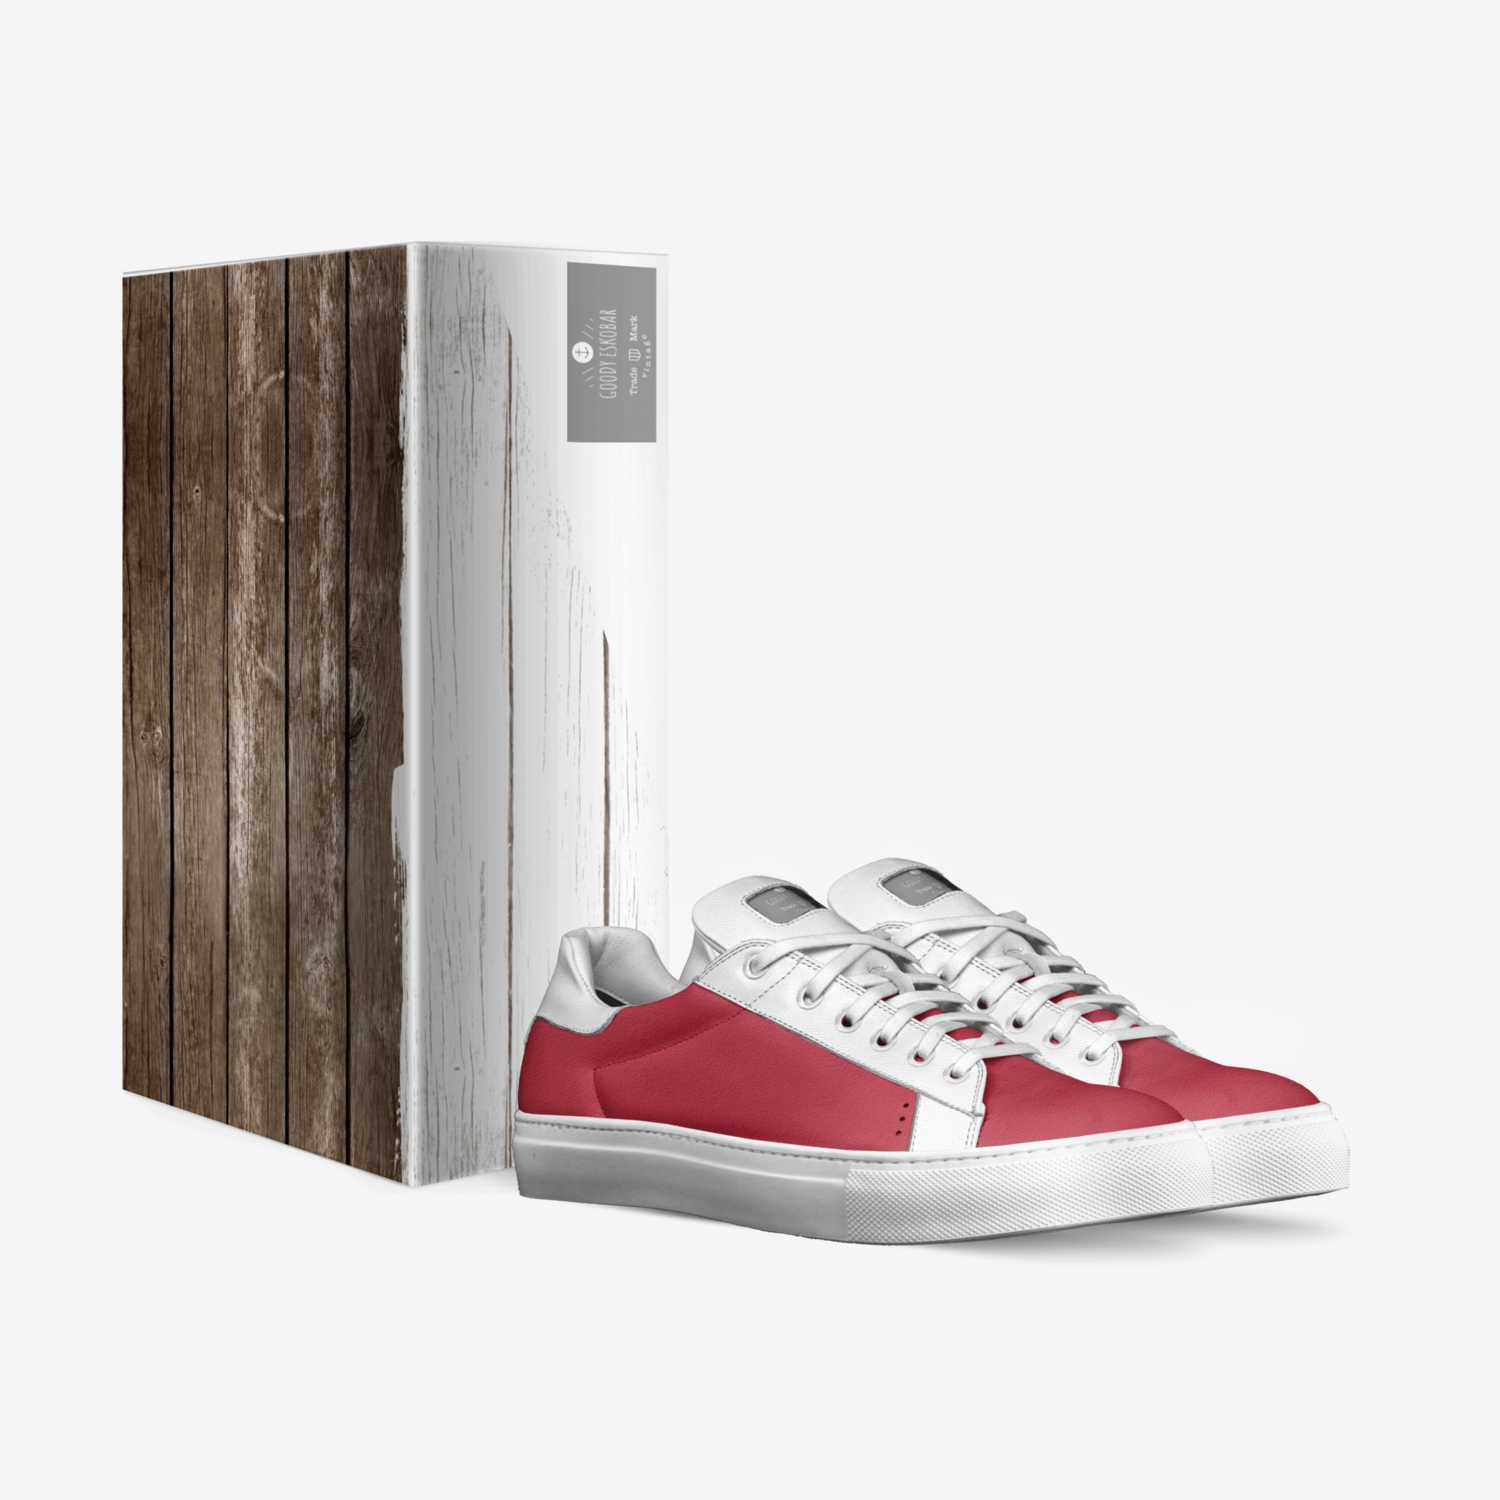 Goody Eskobar custom made in Italy shoes by Kelley Smith-thomas | Box view